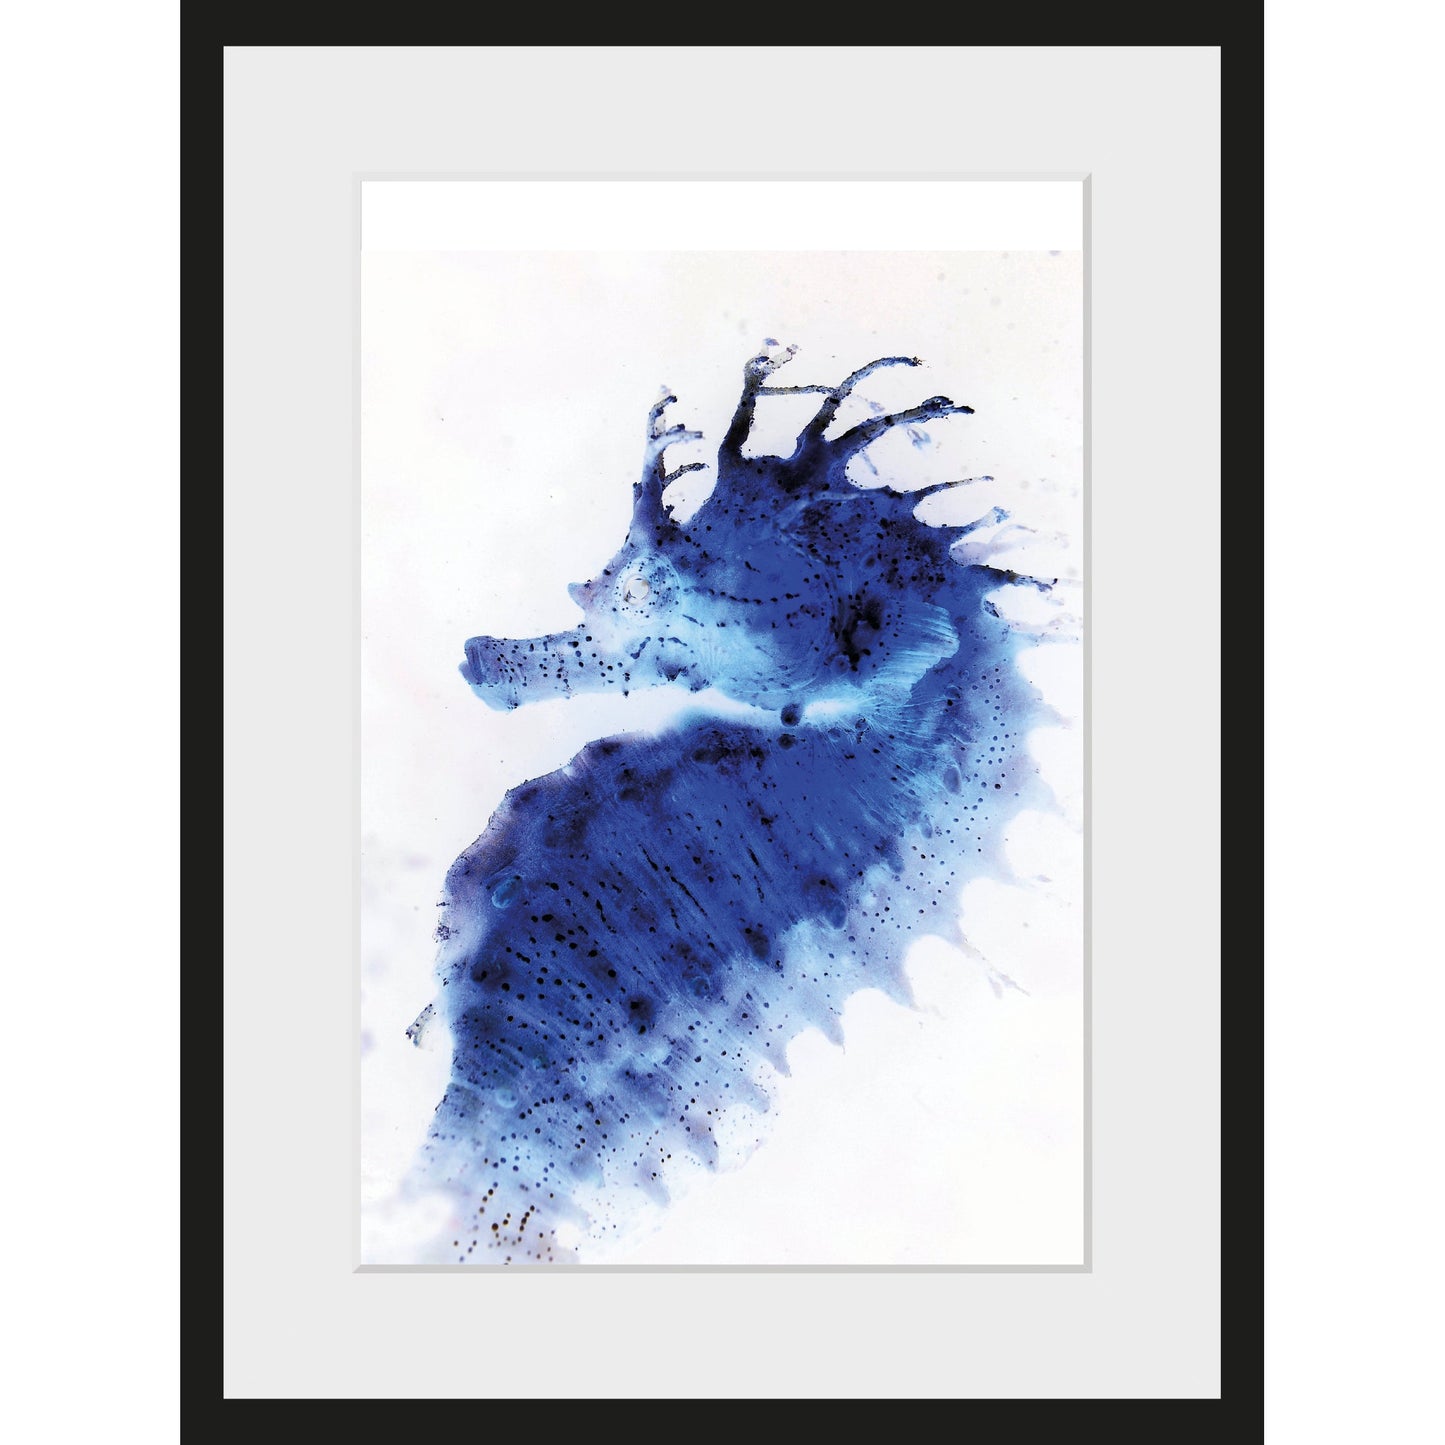 Rahmenbild - Blue Sea Horse